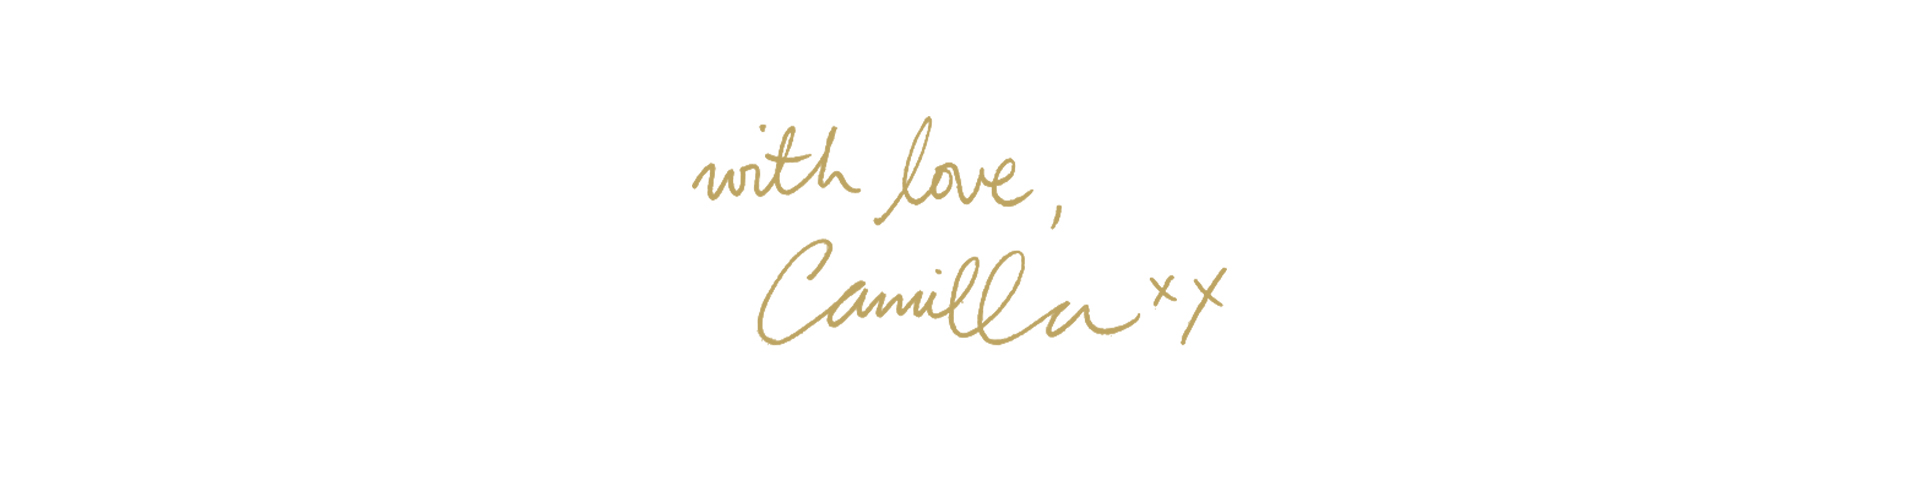 With love, camila xx